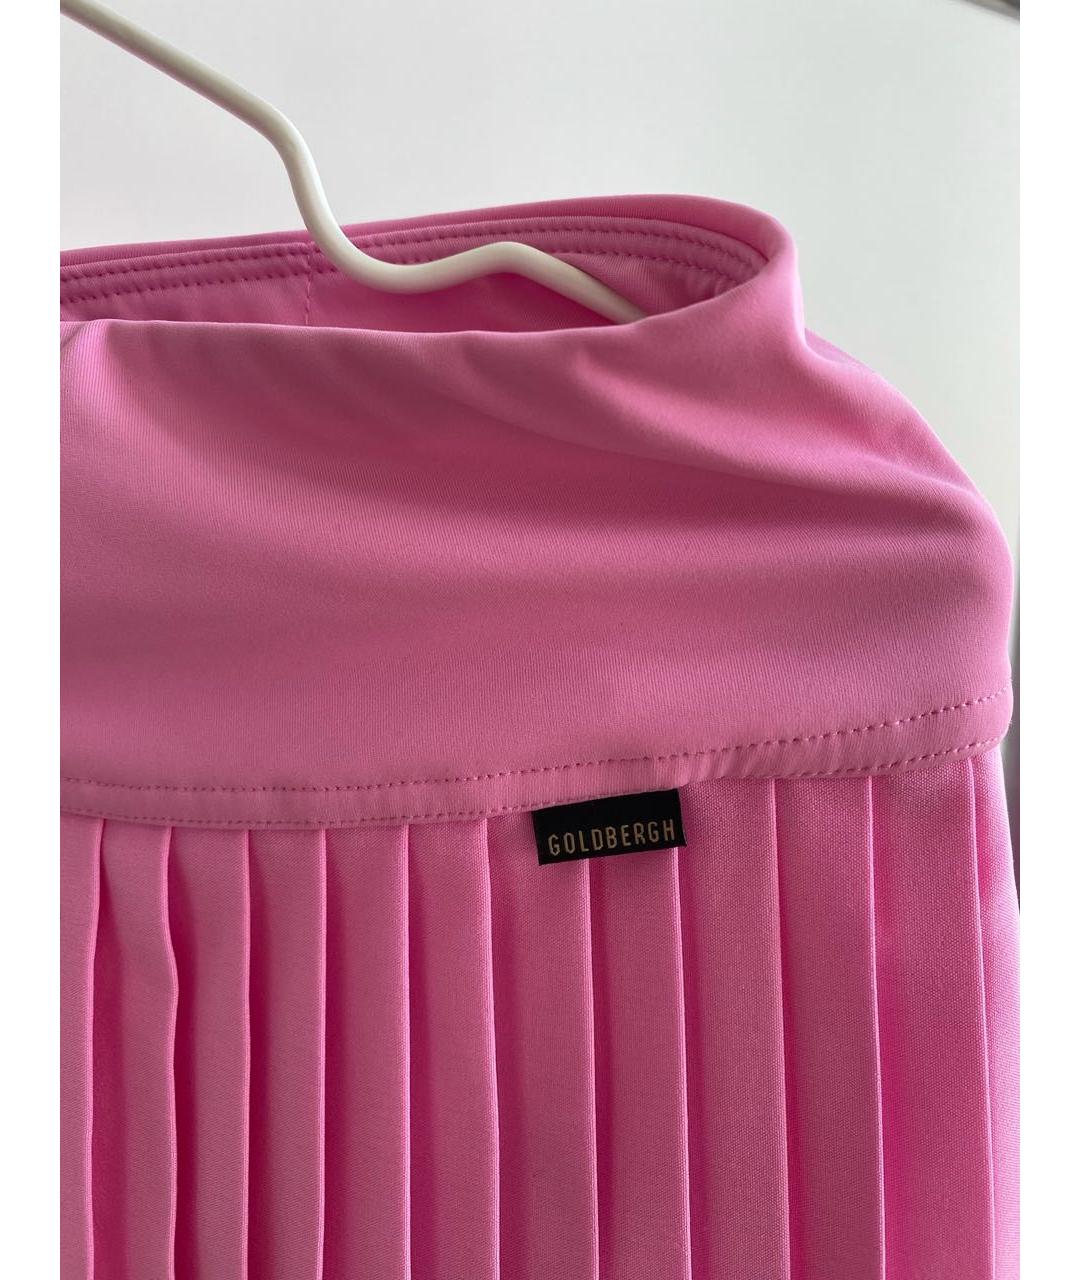 Goldbergh Розовая полиэстеровая юбка мини, фото 2